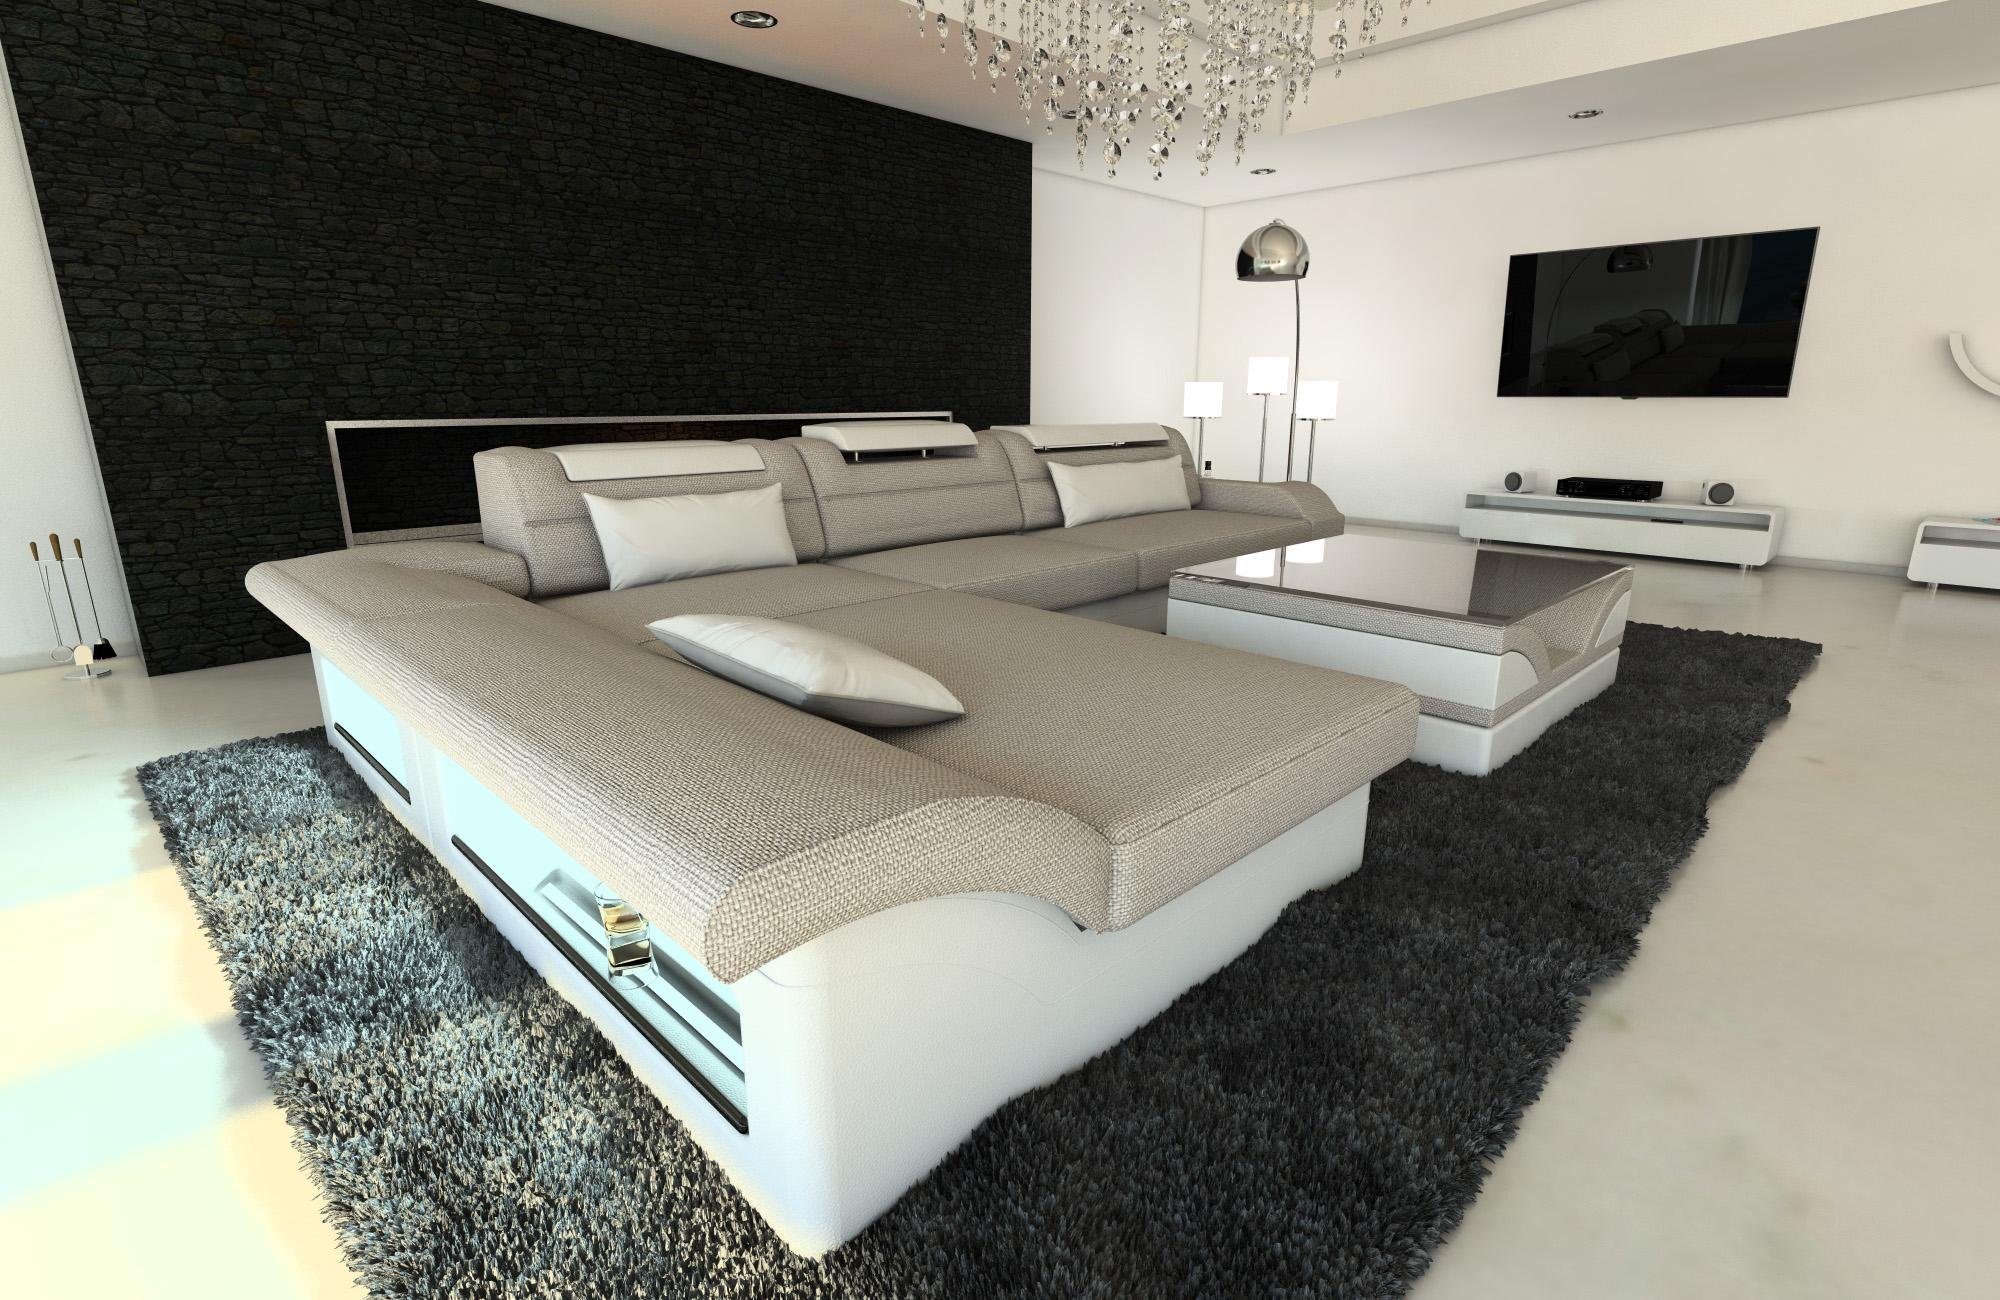 Sofa Dreams Ecksofa Stoffsofa Couch Stoff Polstersofa Monza L Form, mit LED, ausziehbare Bettfunktion, Designersofa H2 Macchiato-Weiss